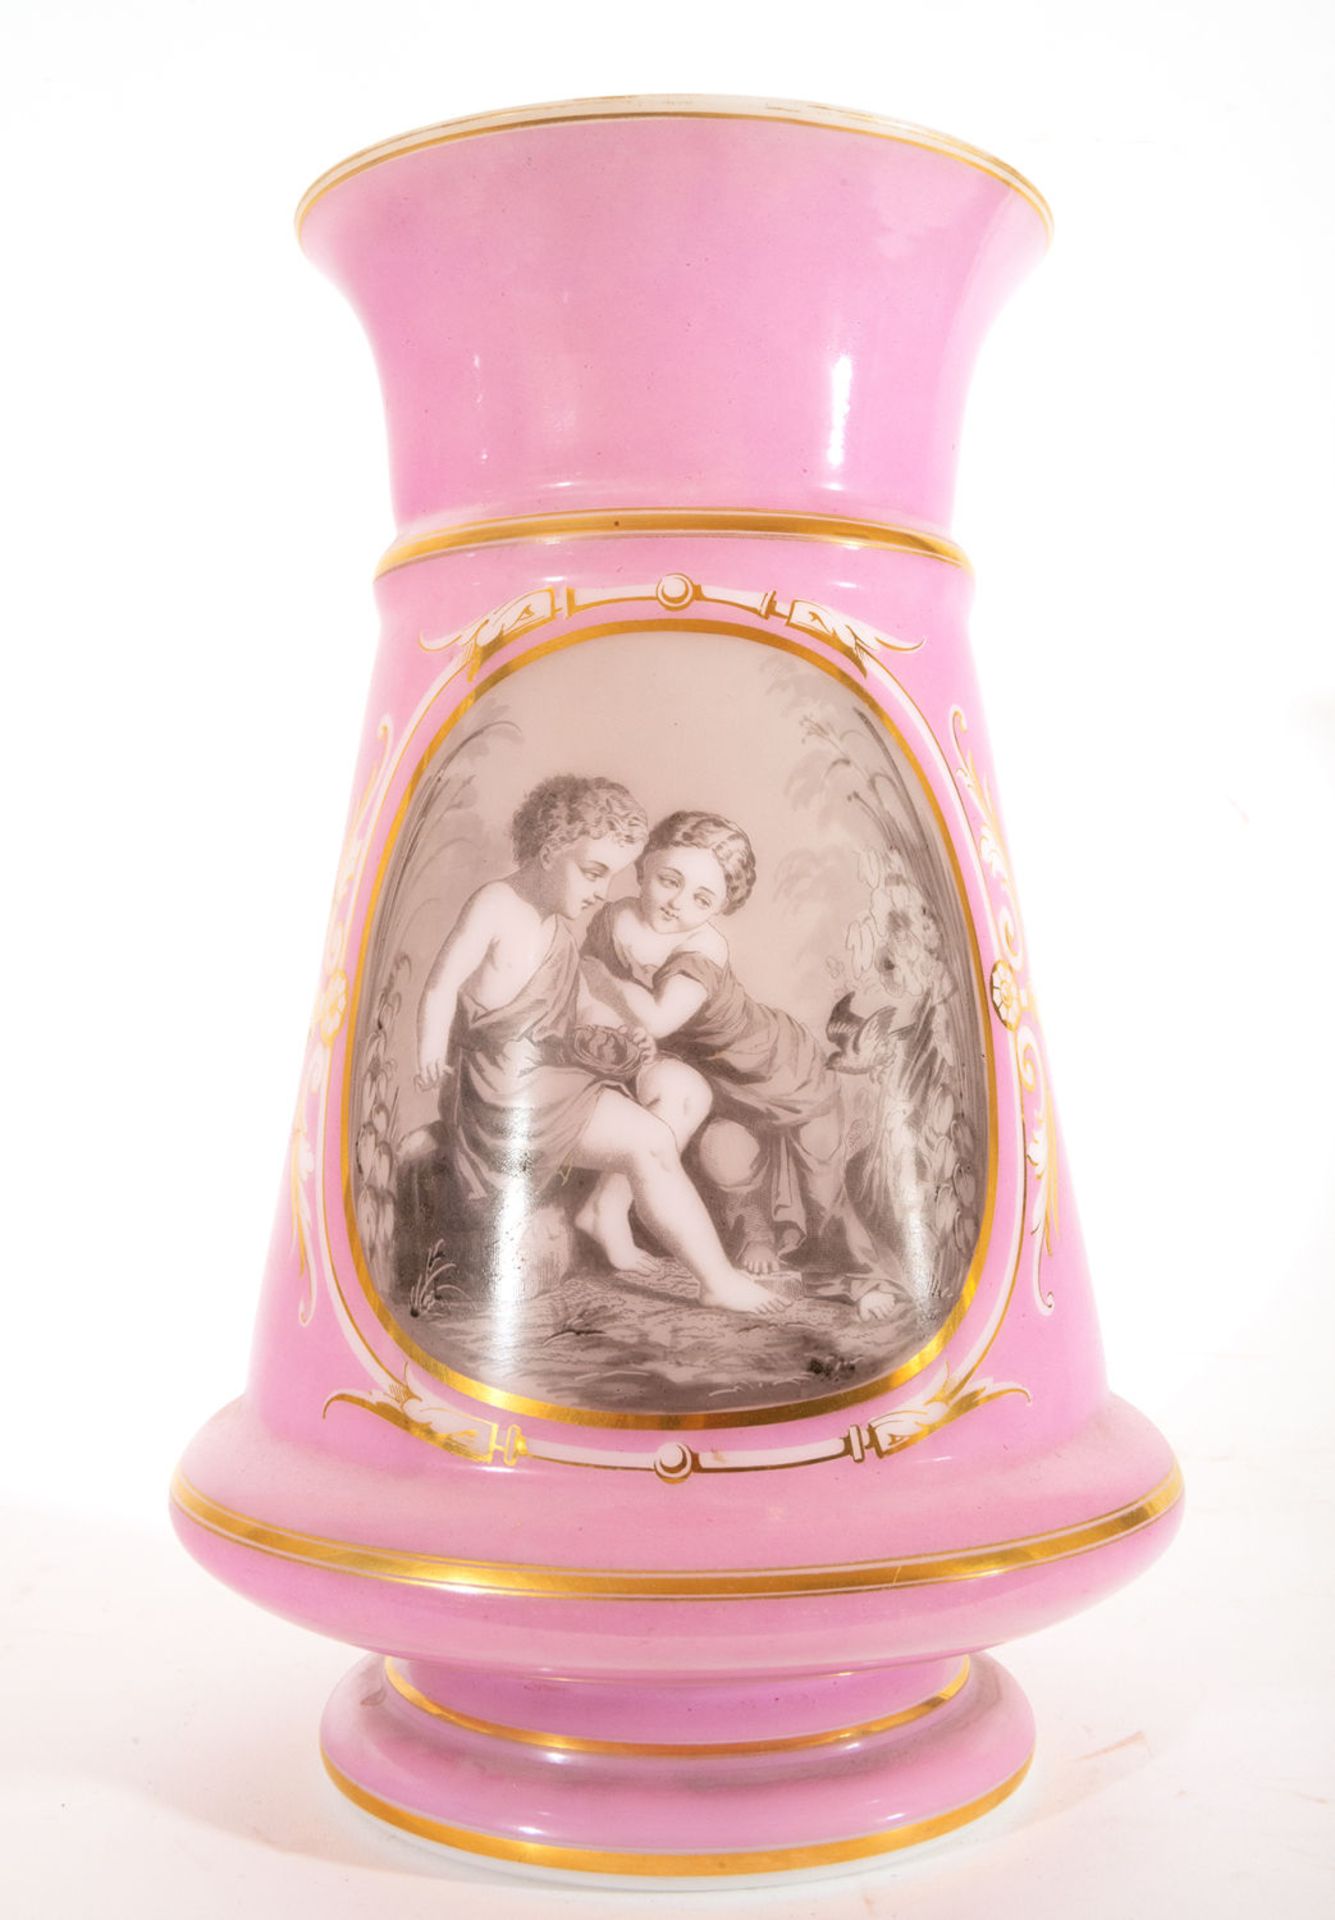 Pair of Opaline Vases with Romantic Scenes, 19th century - Image 7 of 10